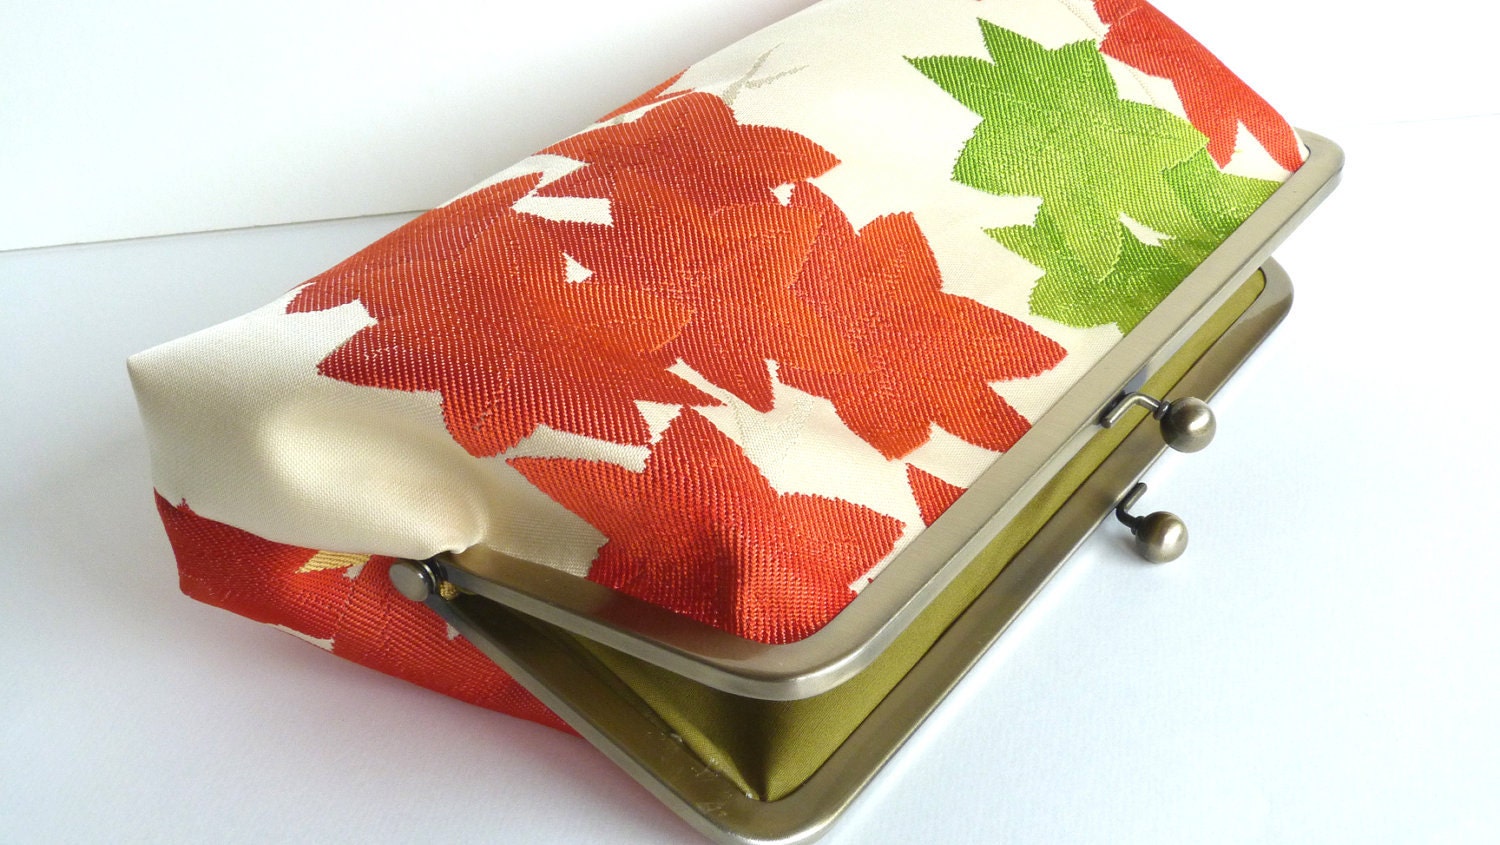 Autumn Orange and Green Japanese Maple Leaf Woven Clutch Bag, Evening Purse, Handbag - cheekyleopard